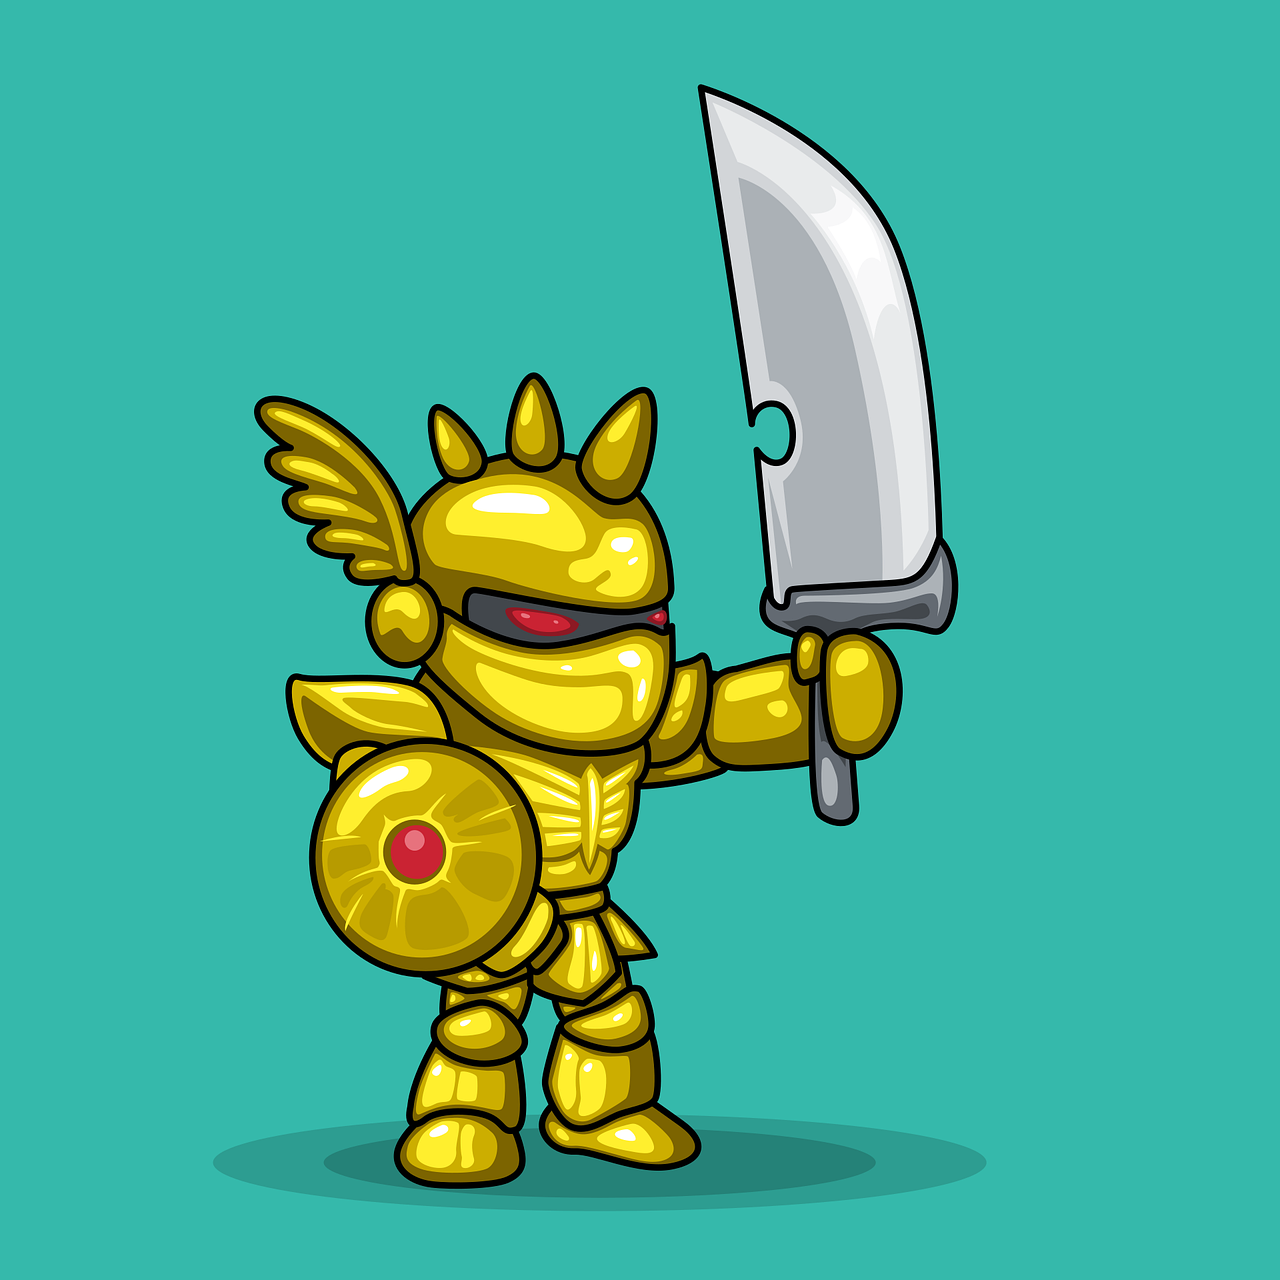 a cartoon character holding a large knife, fantasy art, golden armour, cartoonish vector style, cartoon style illustration